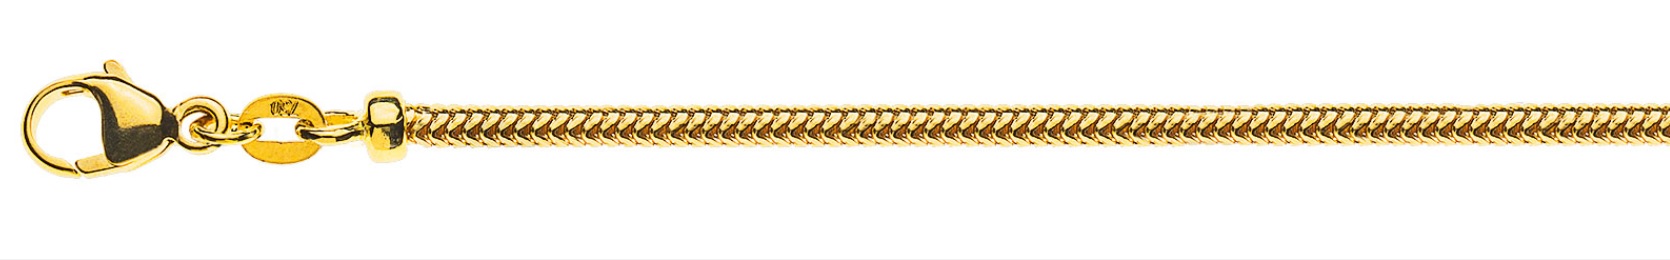 AURONOS Prestige Necklace yellow gold 18K snake chain 50cm 2.4mm